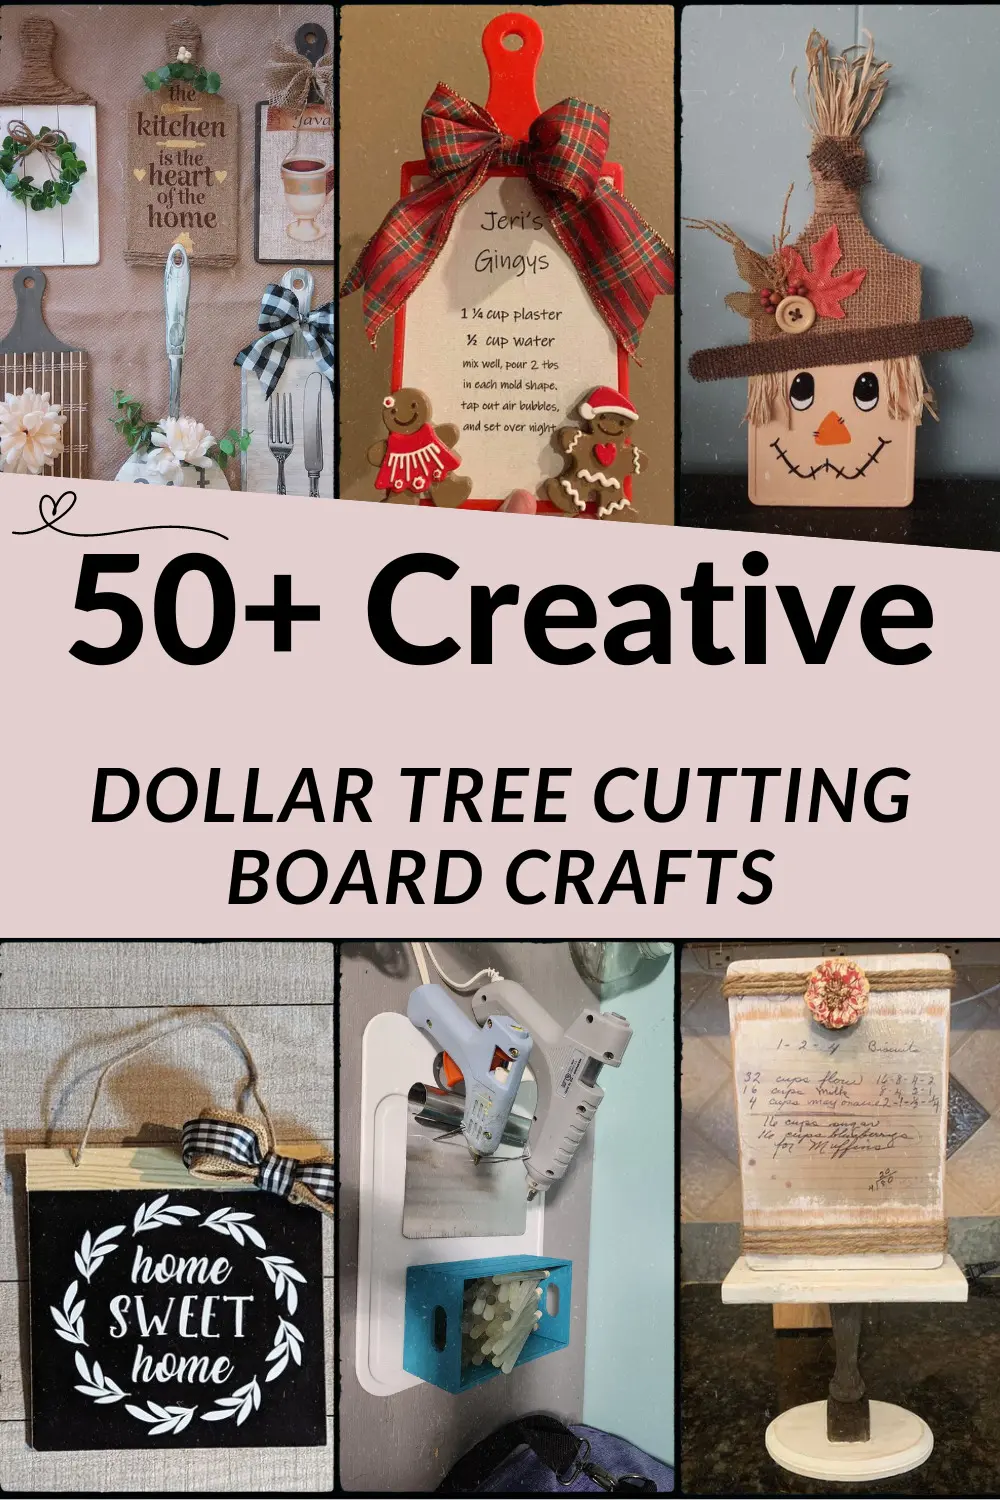 Dollar Store Tutorial - Turn Cutting Board into a Faux Antique Wood Board!